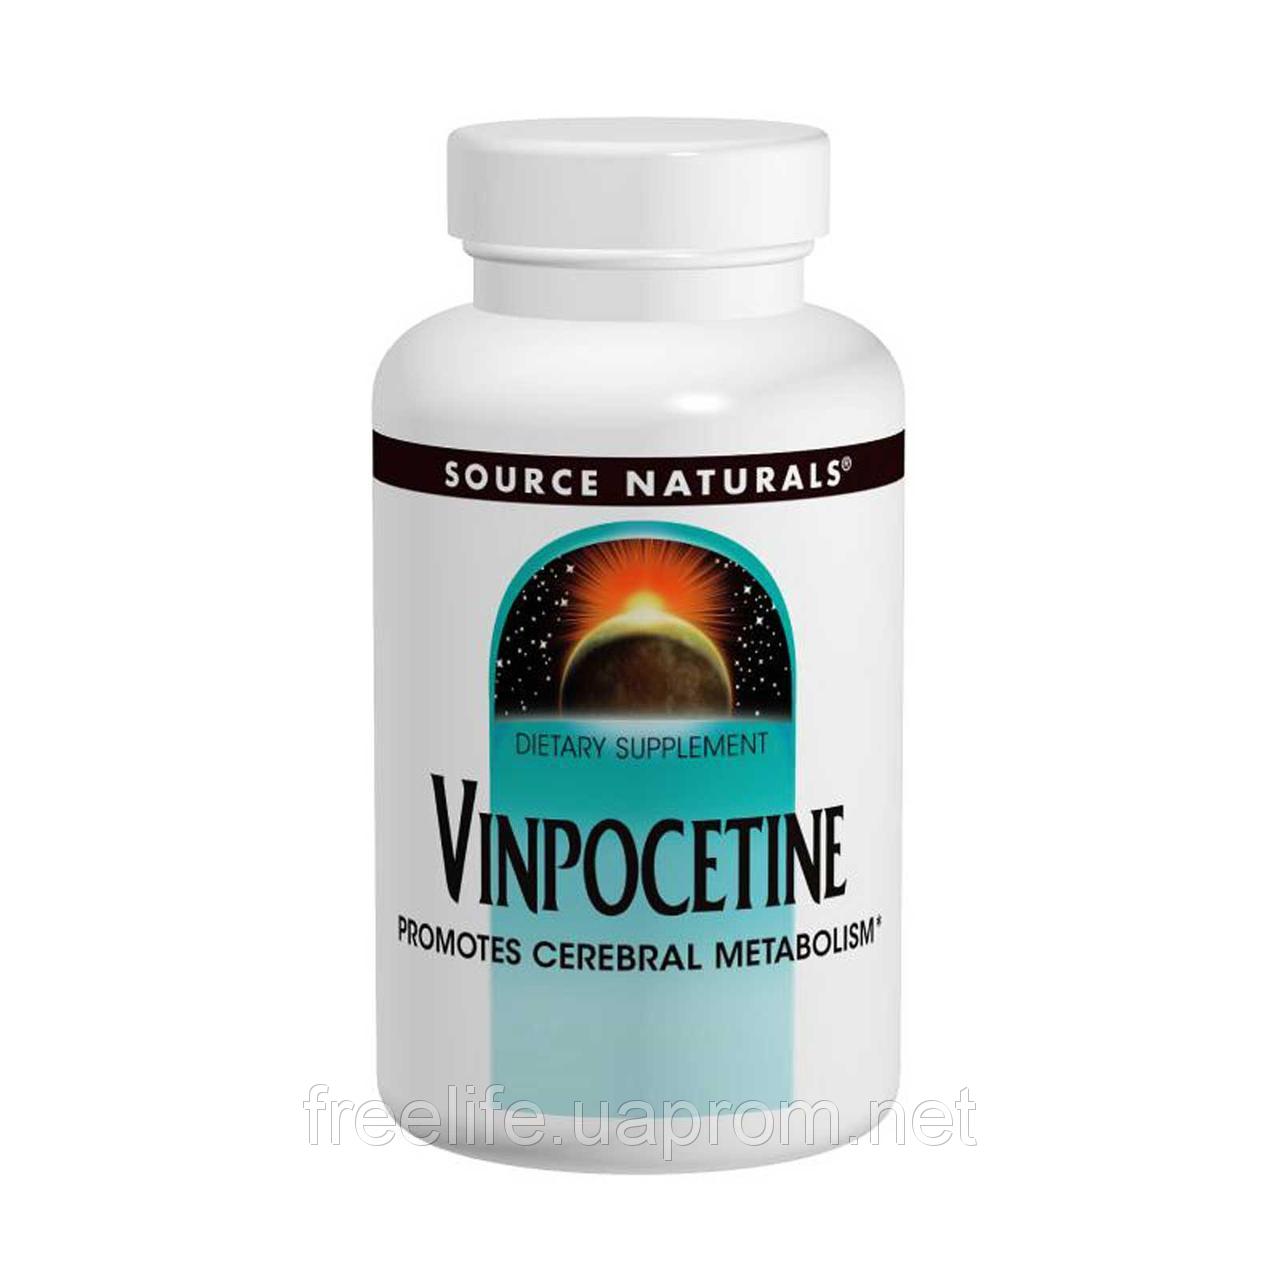 4635 ВІНПОЦЕТИН - Vinpocetine